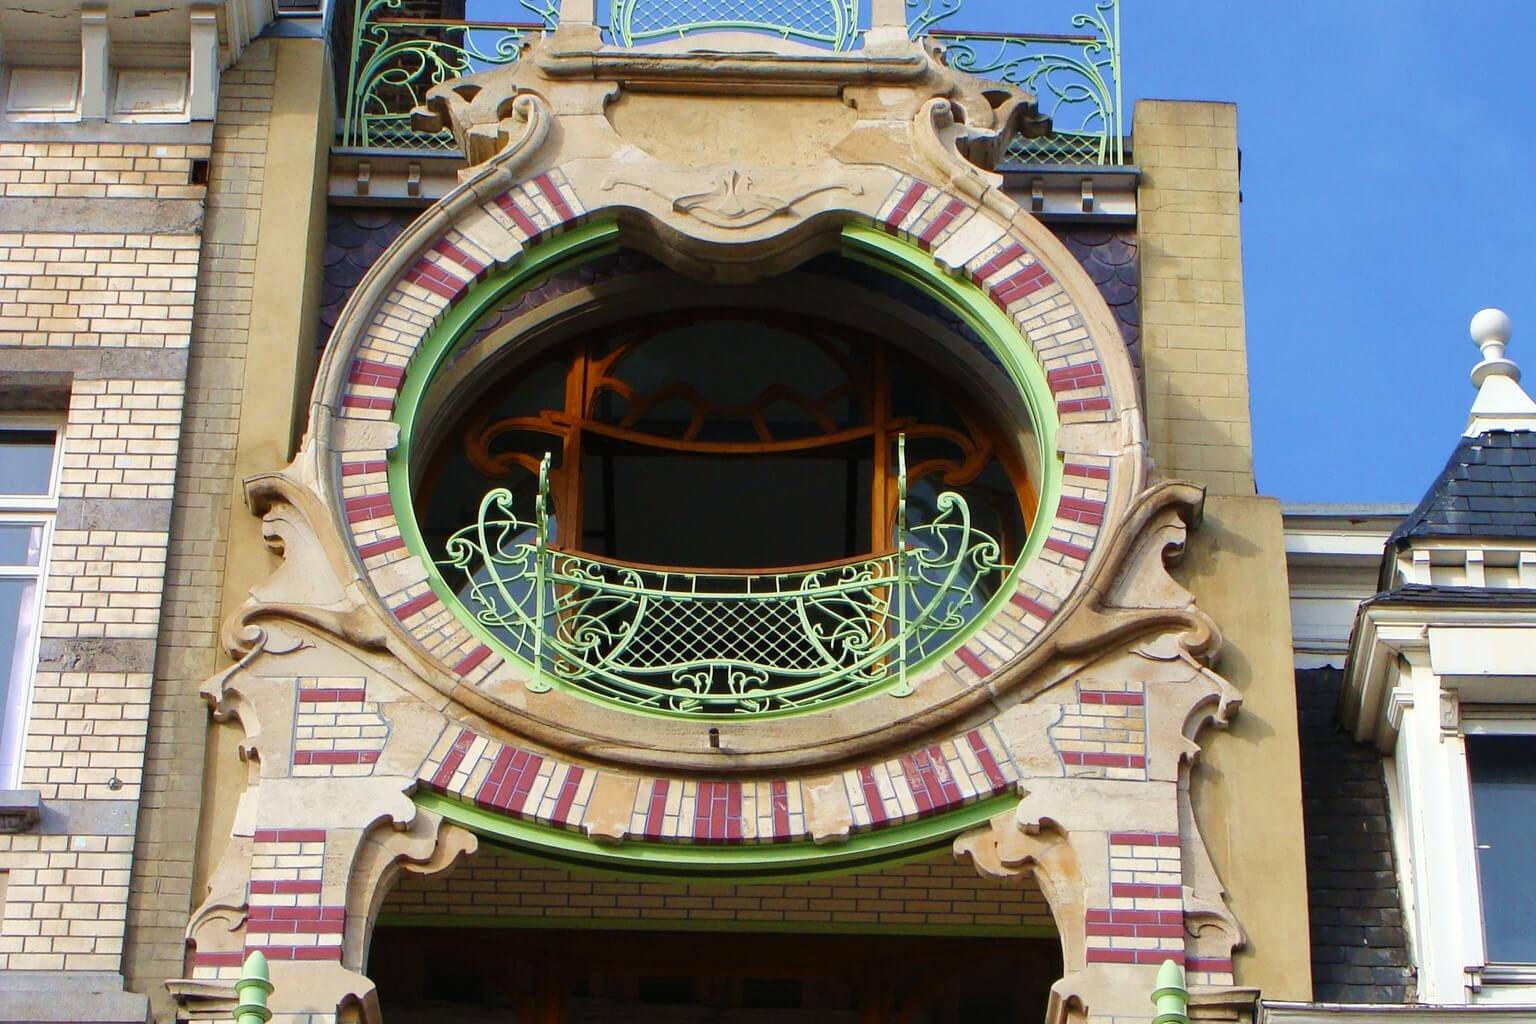 Rondleiding Art Nouveau in de wijk van de squares